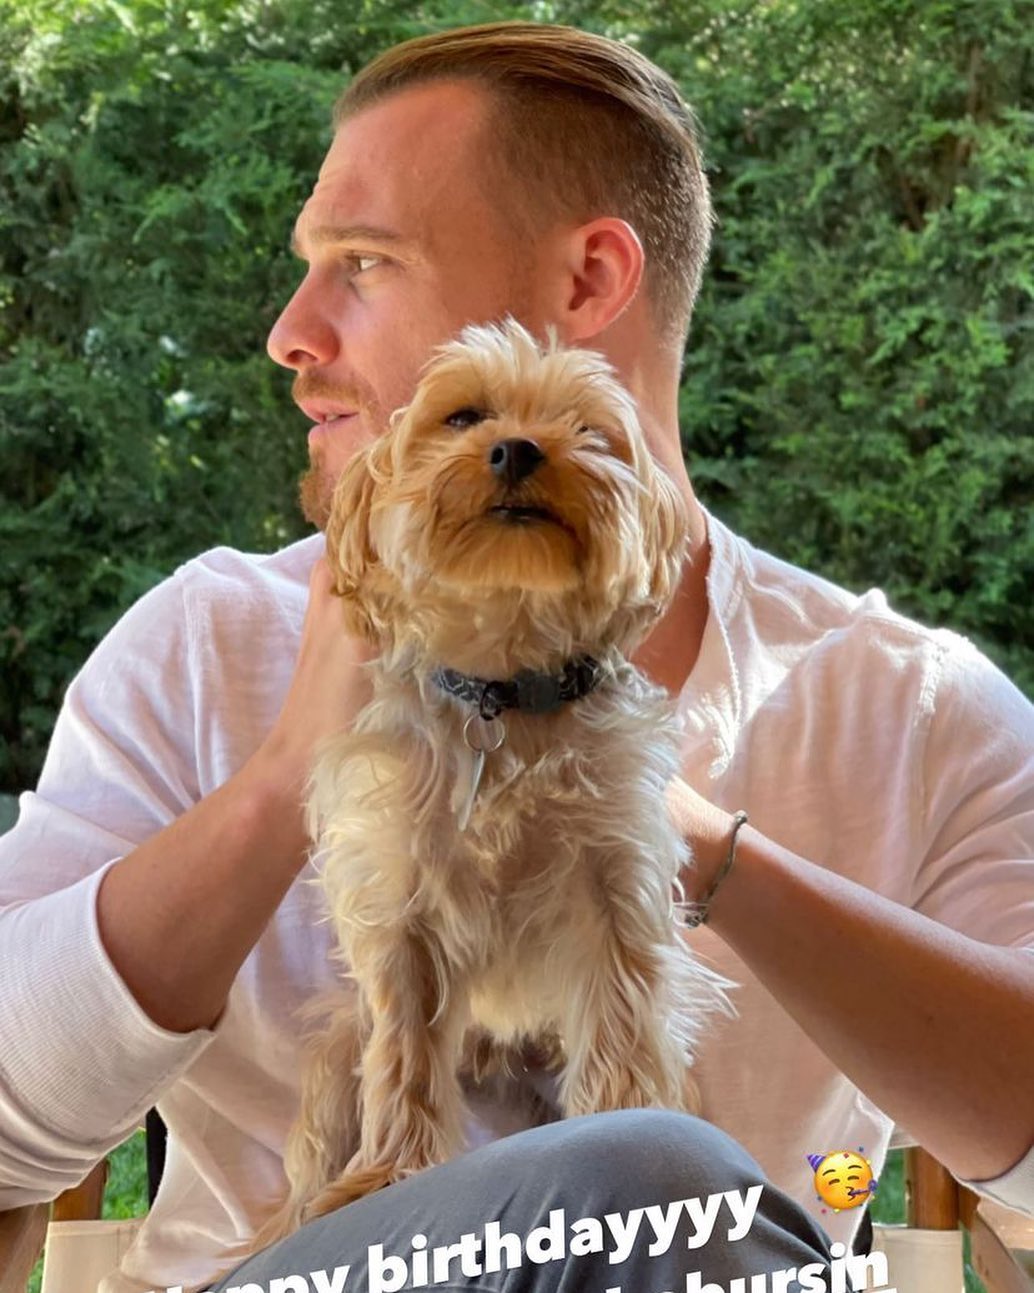 Kerem Bürsin with his pet dog instagram story on birthday